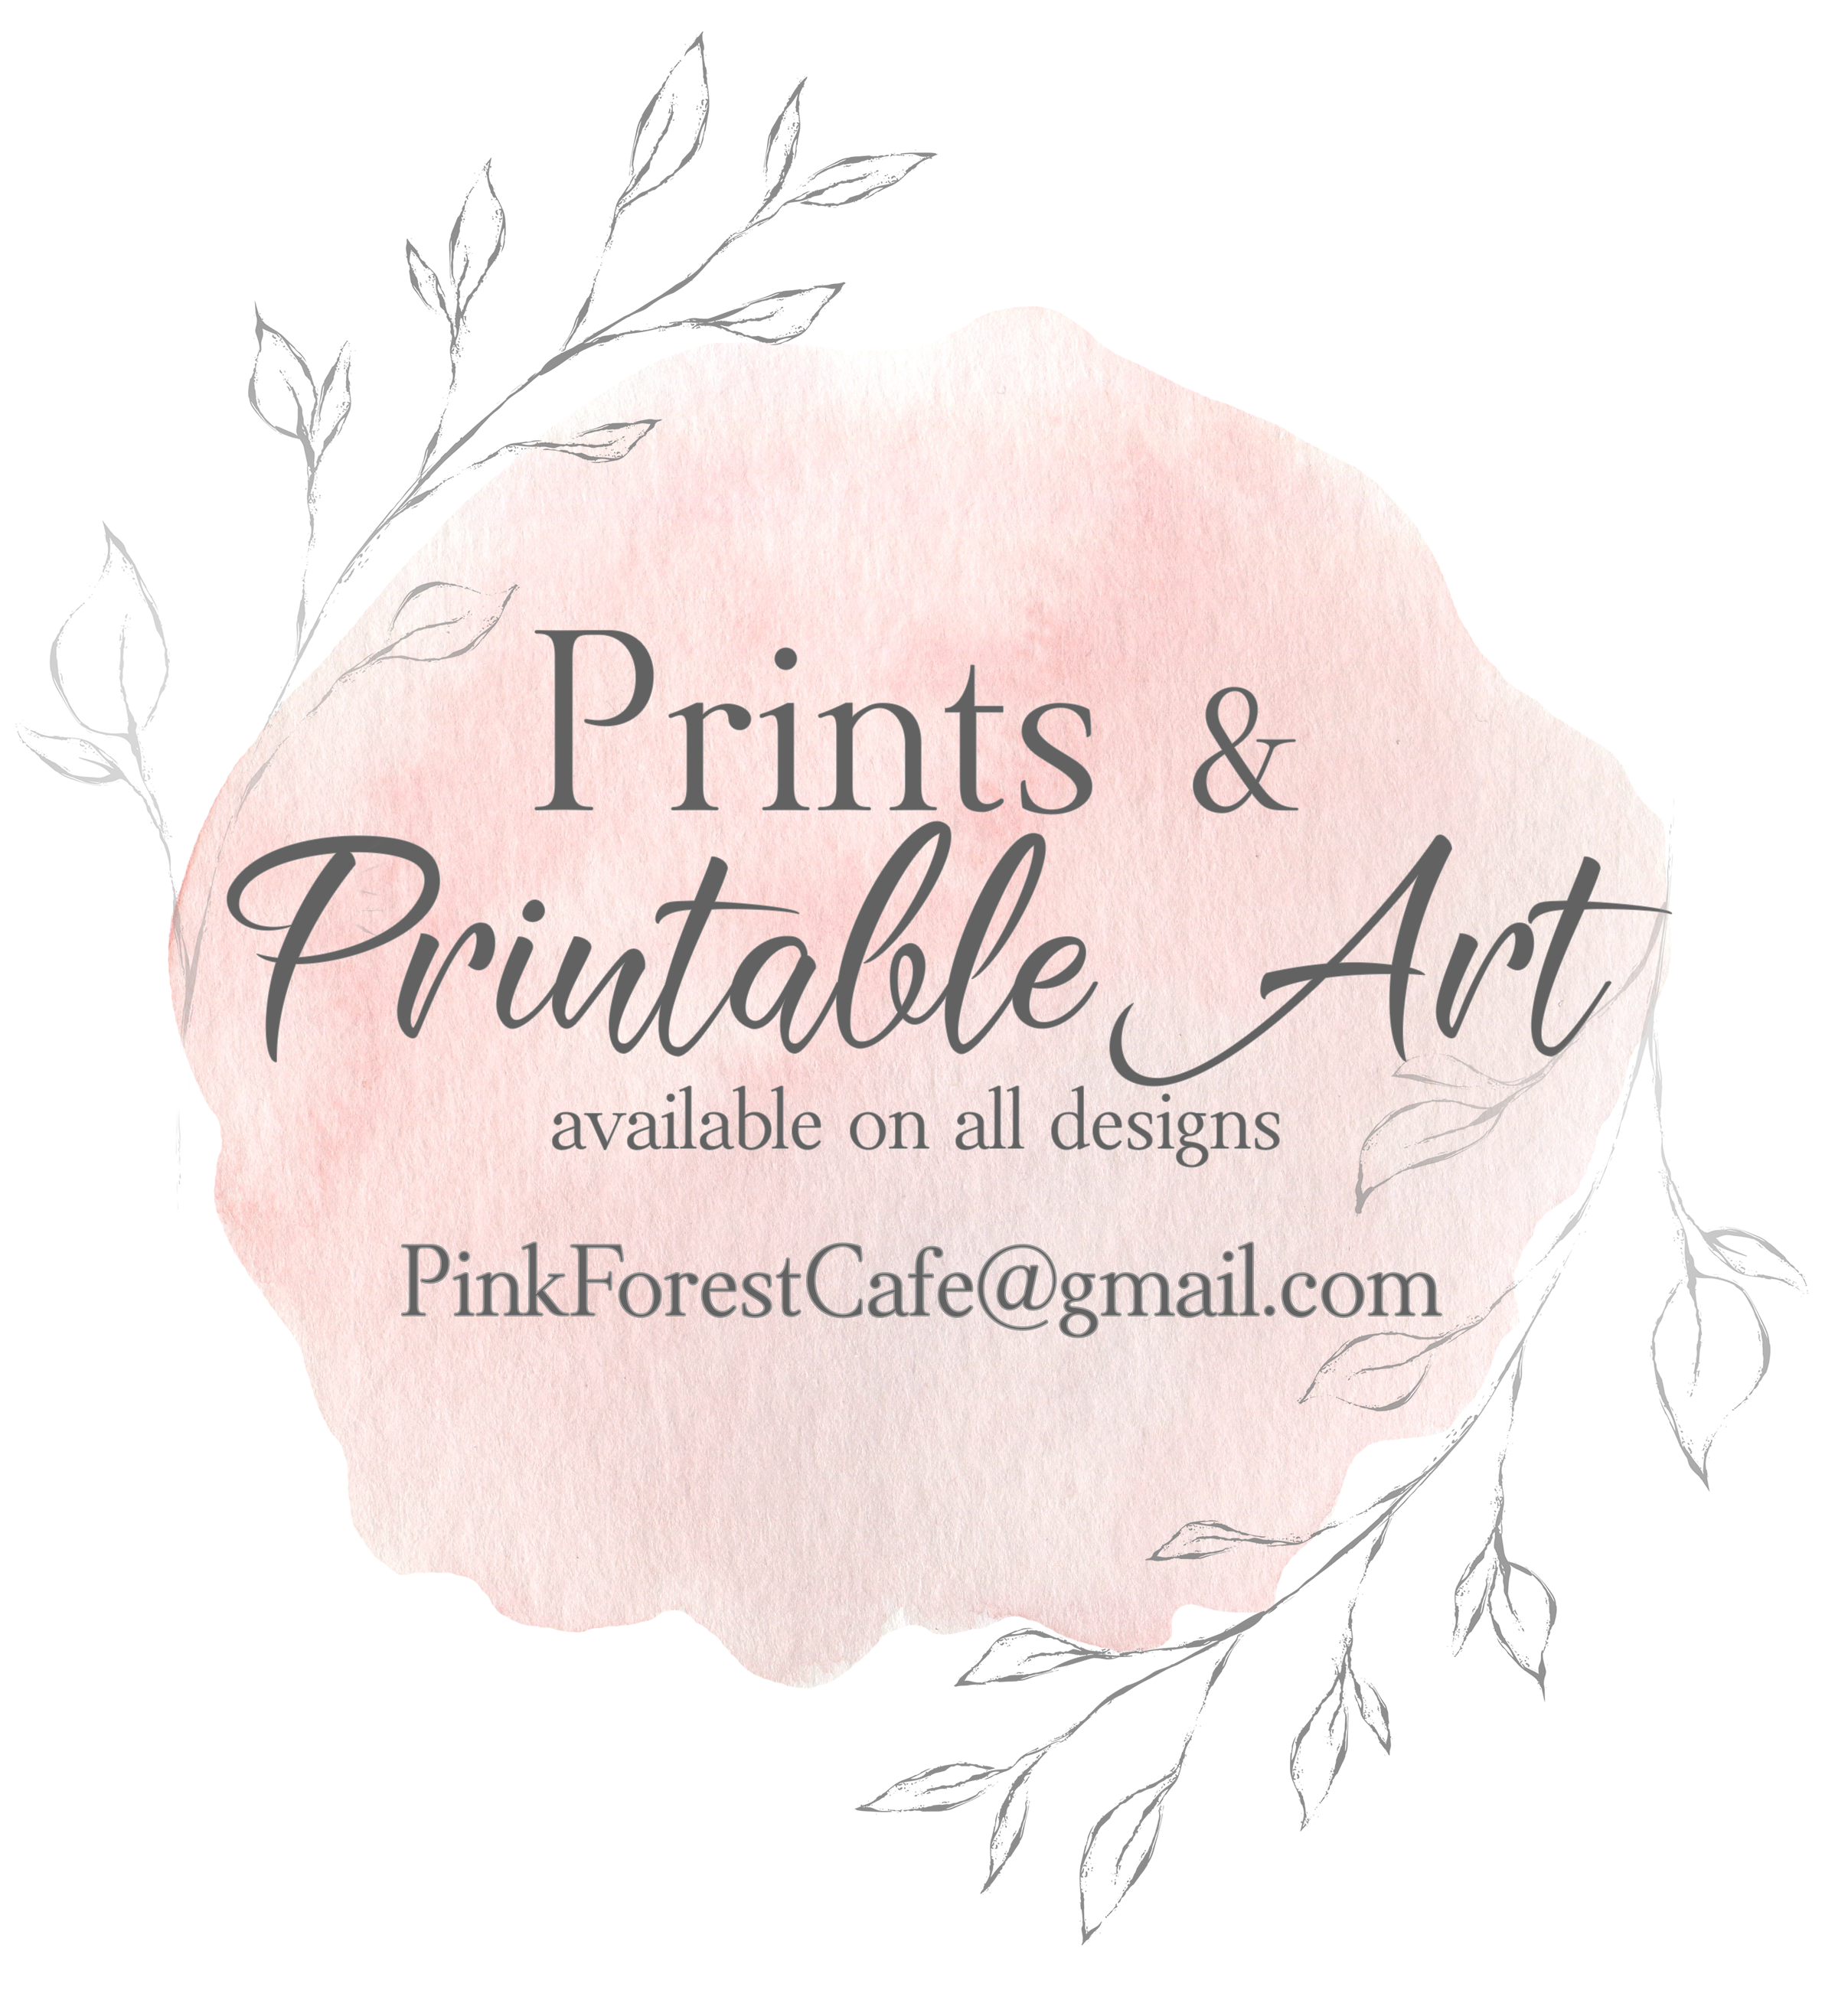 Custom Calligraphy Baby Girl Name Wall Art Print Personalized Gift Peony Blush Roses Nursery Decor